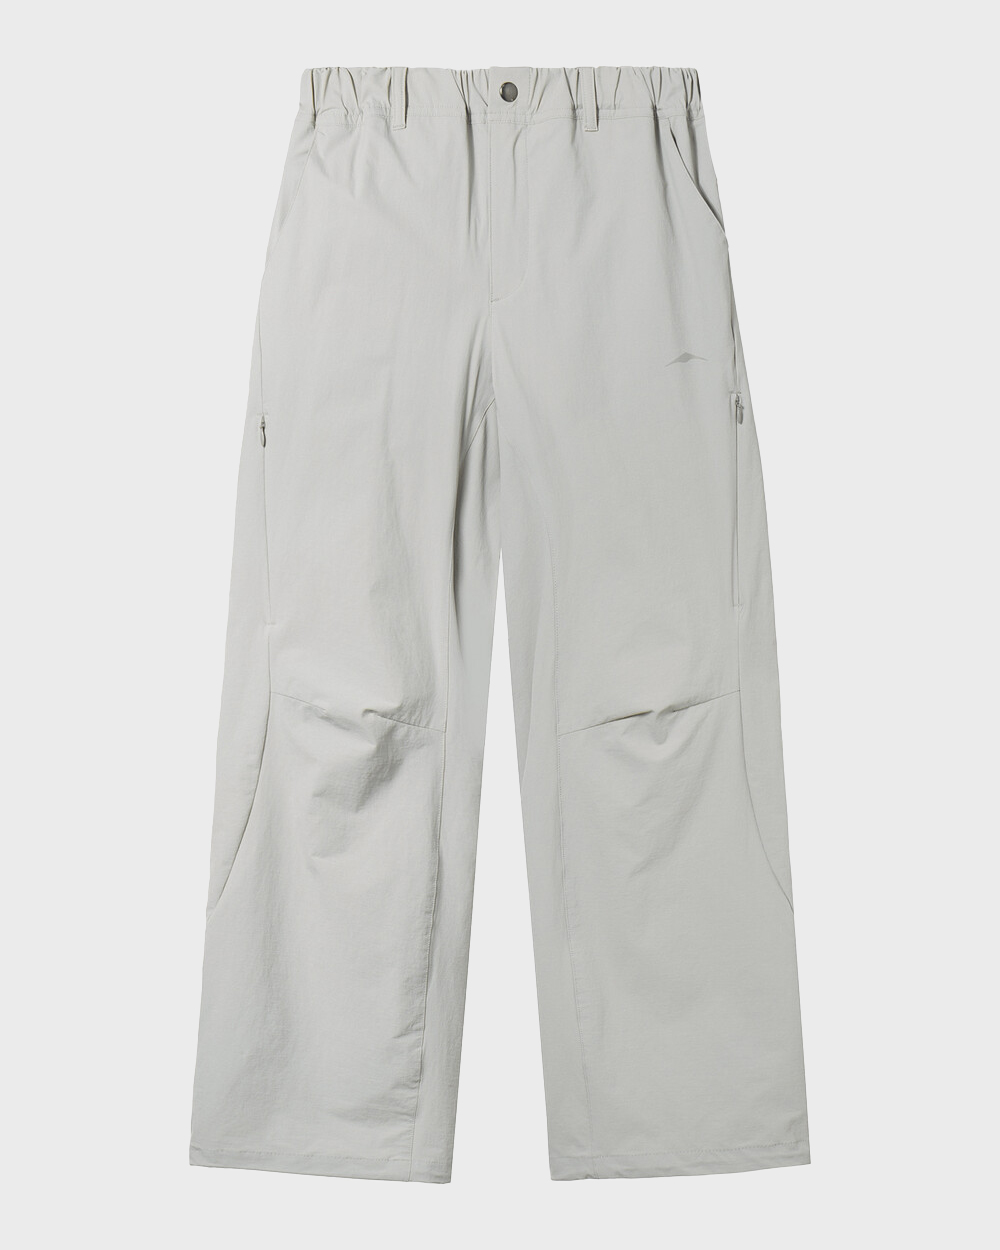 Ventilation Curved Pants 2.0 (Light Grey)